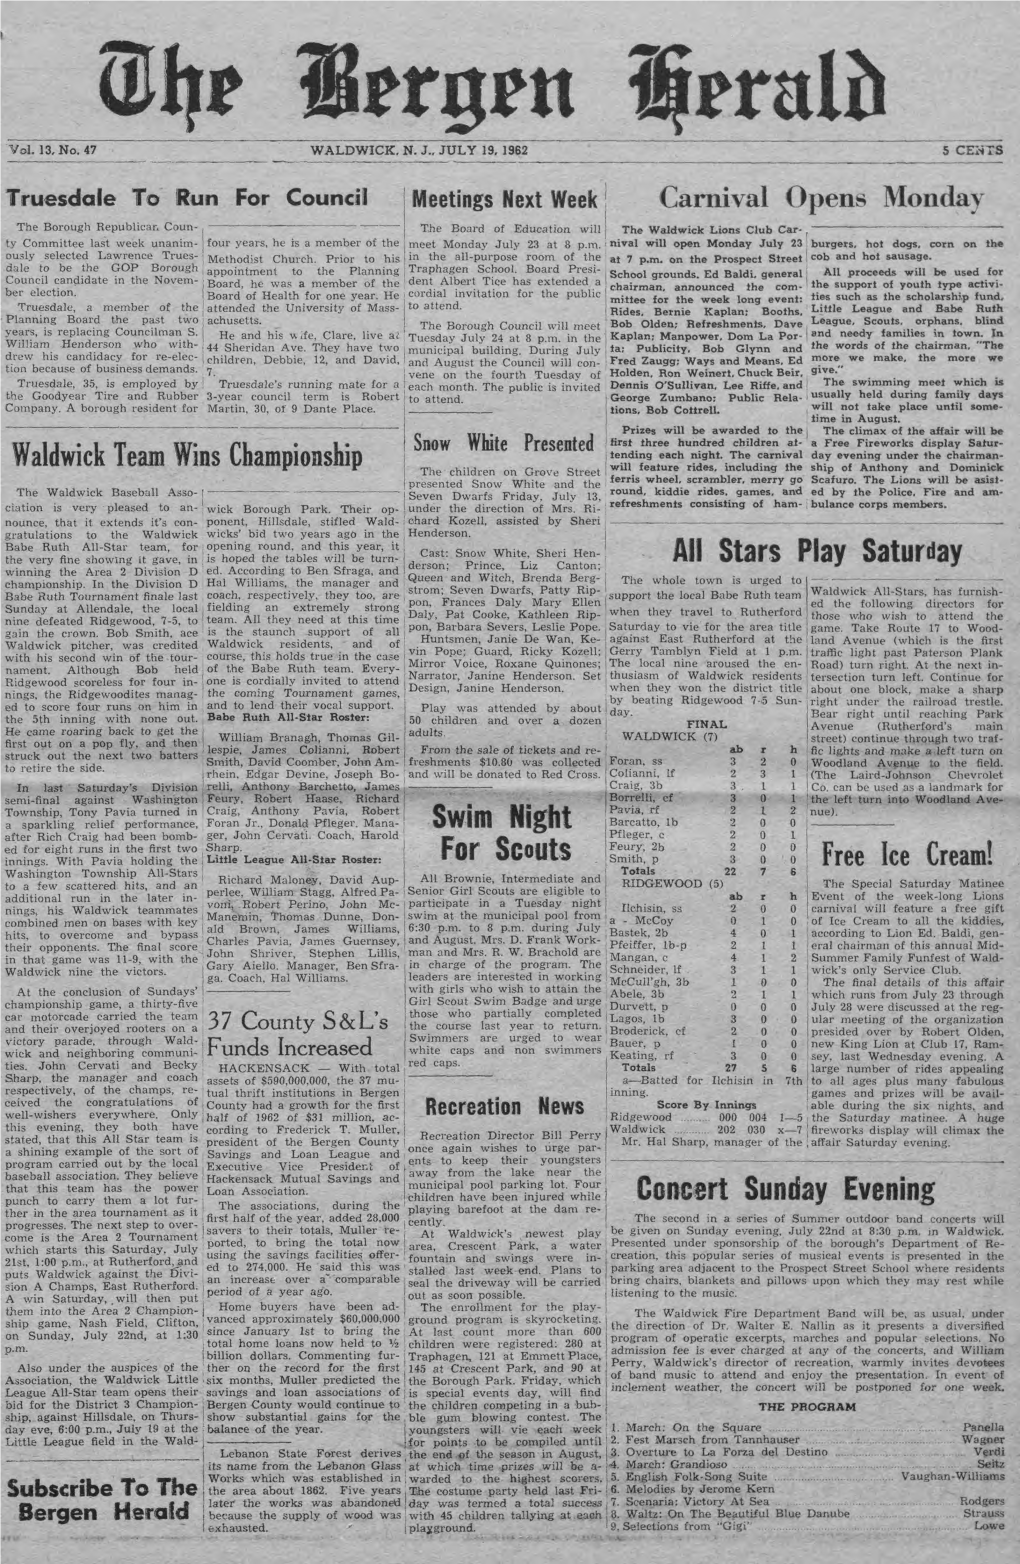 THE BERGEN HERALD Thursday July 19, 1962